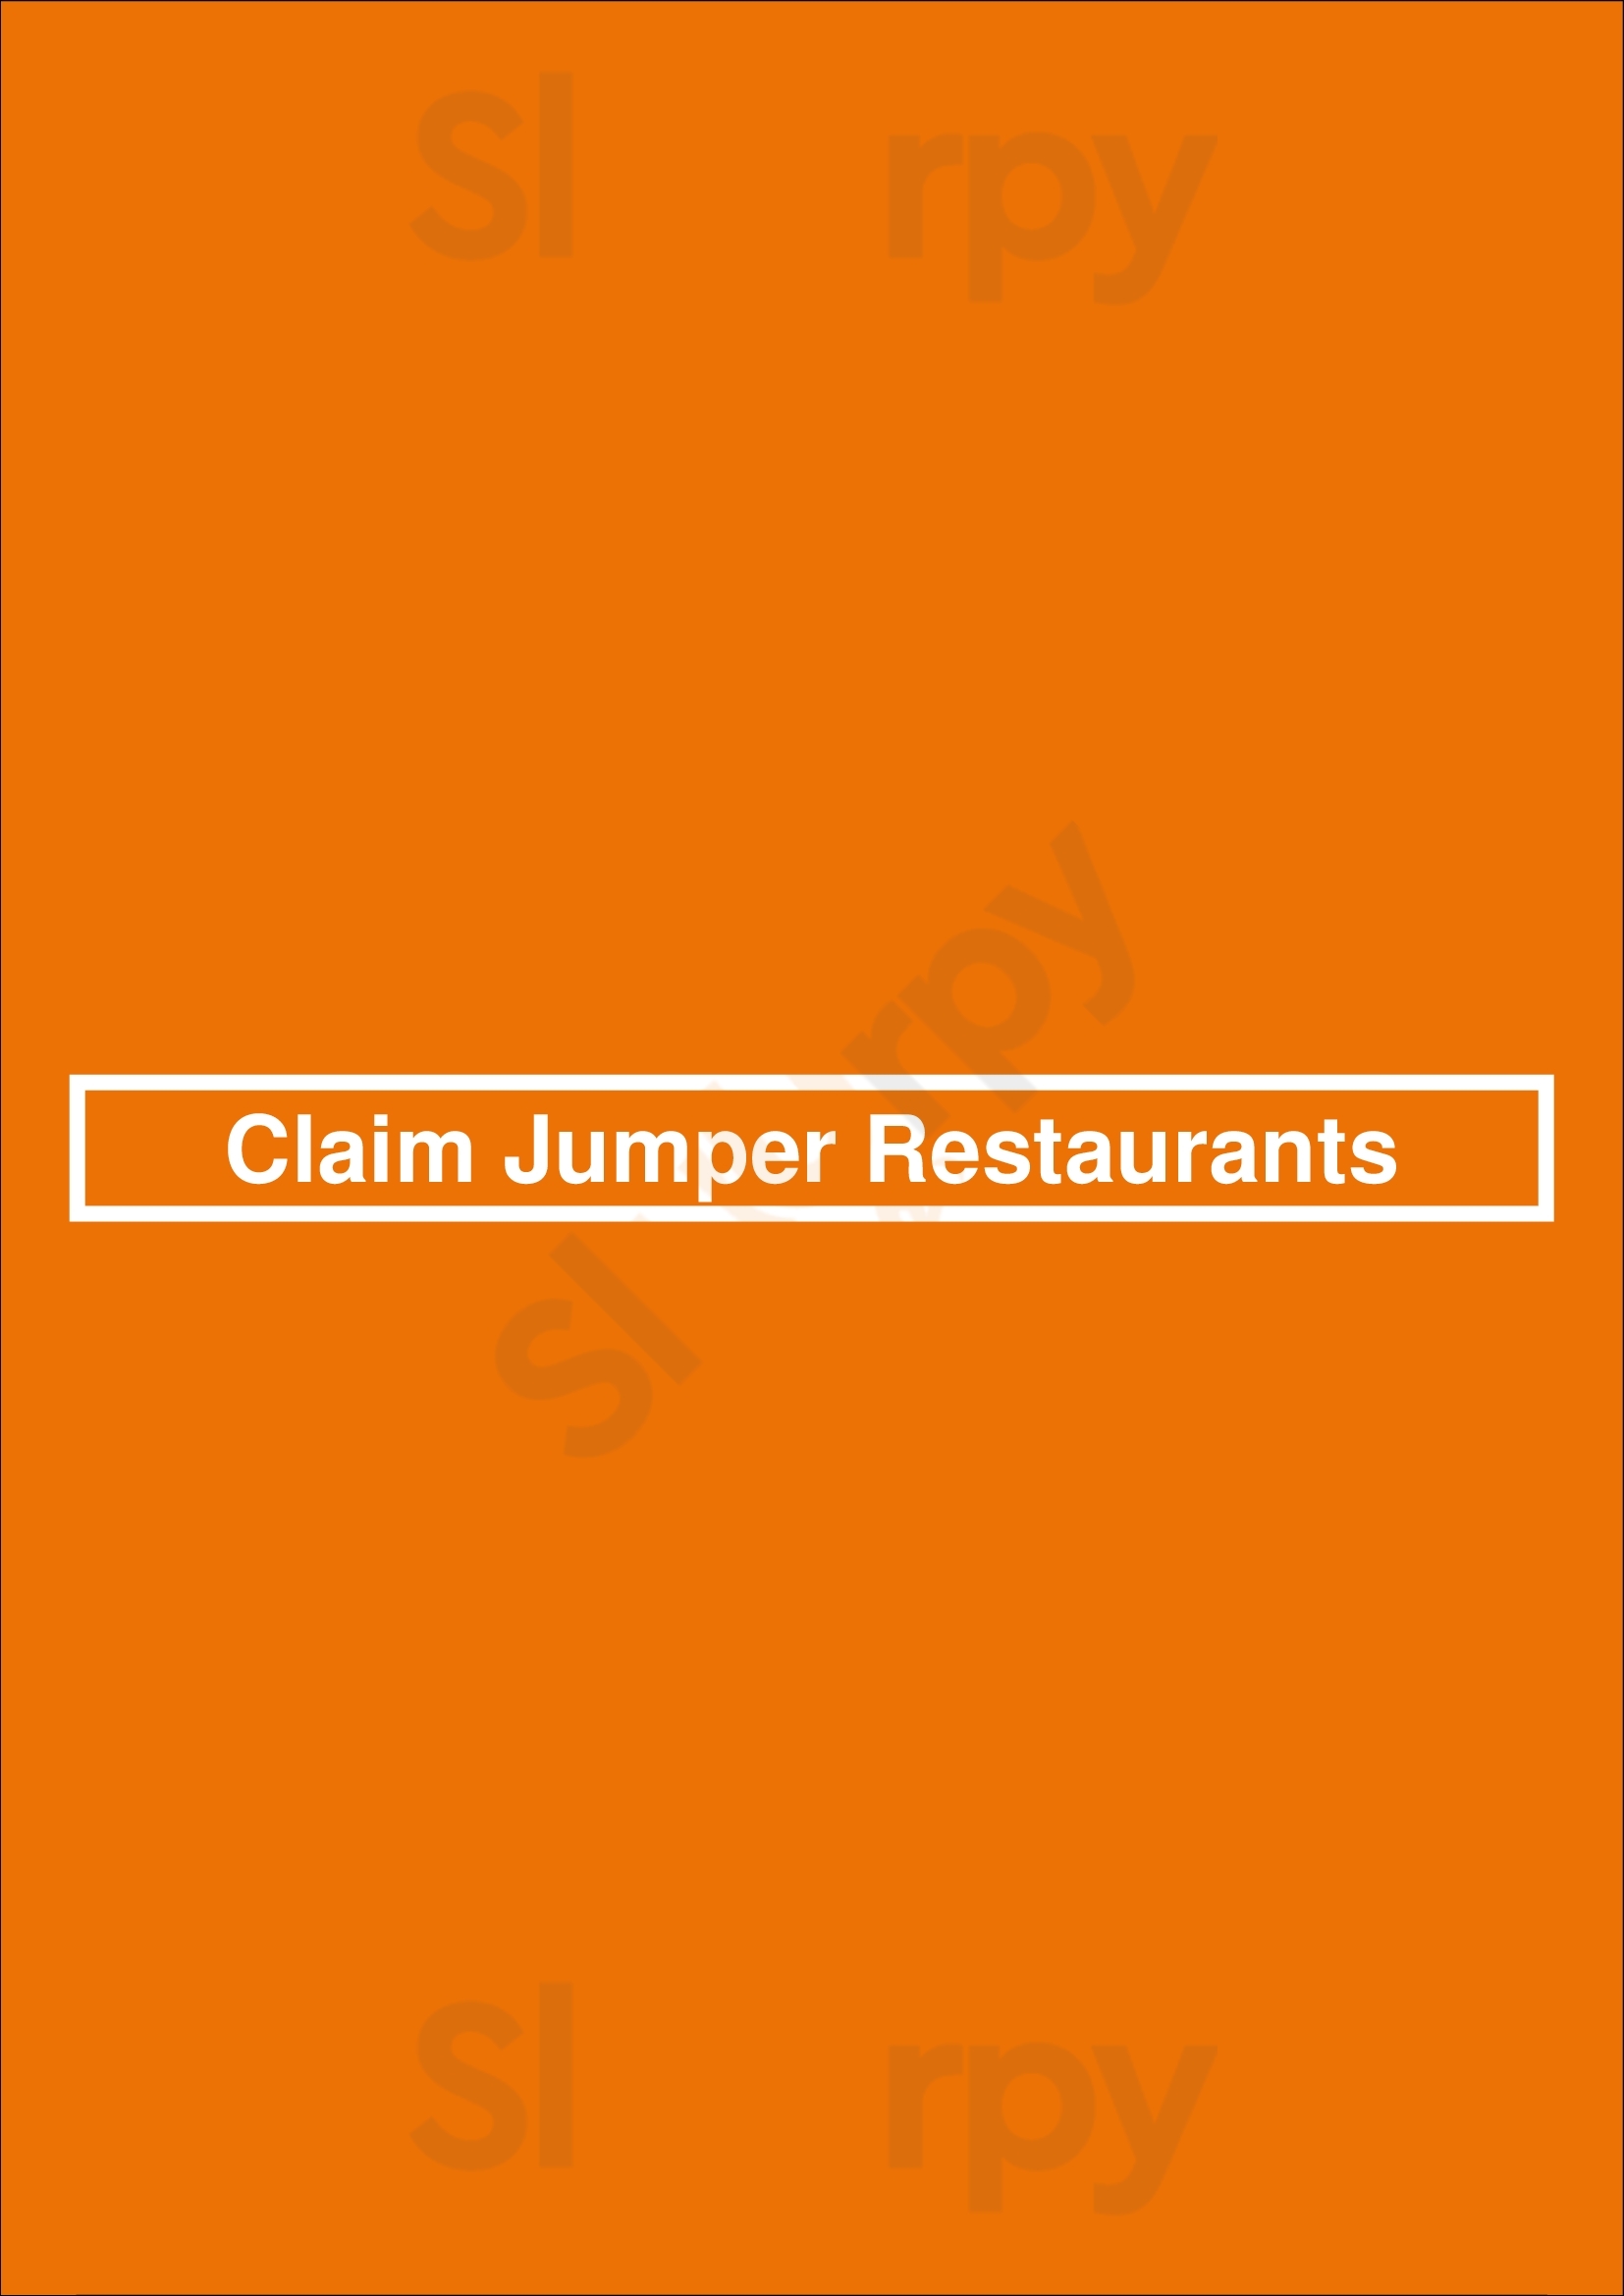 Claim Jumper Steakhouse & Bar - San Diego, Ca San Diego Menu - 1